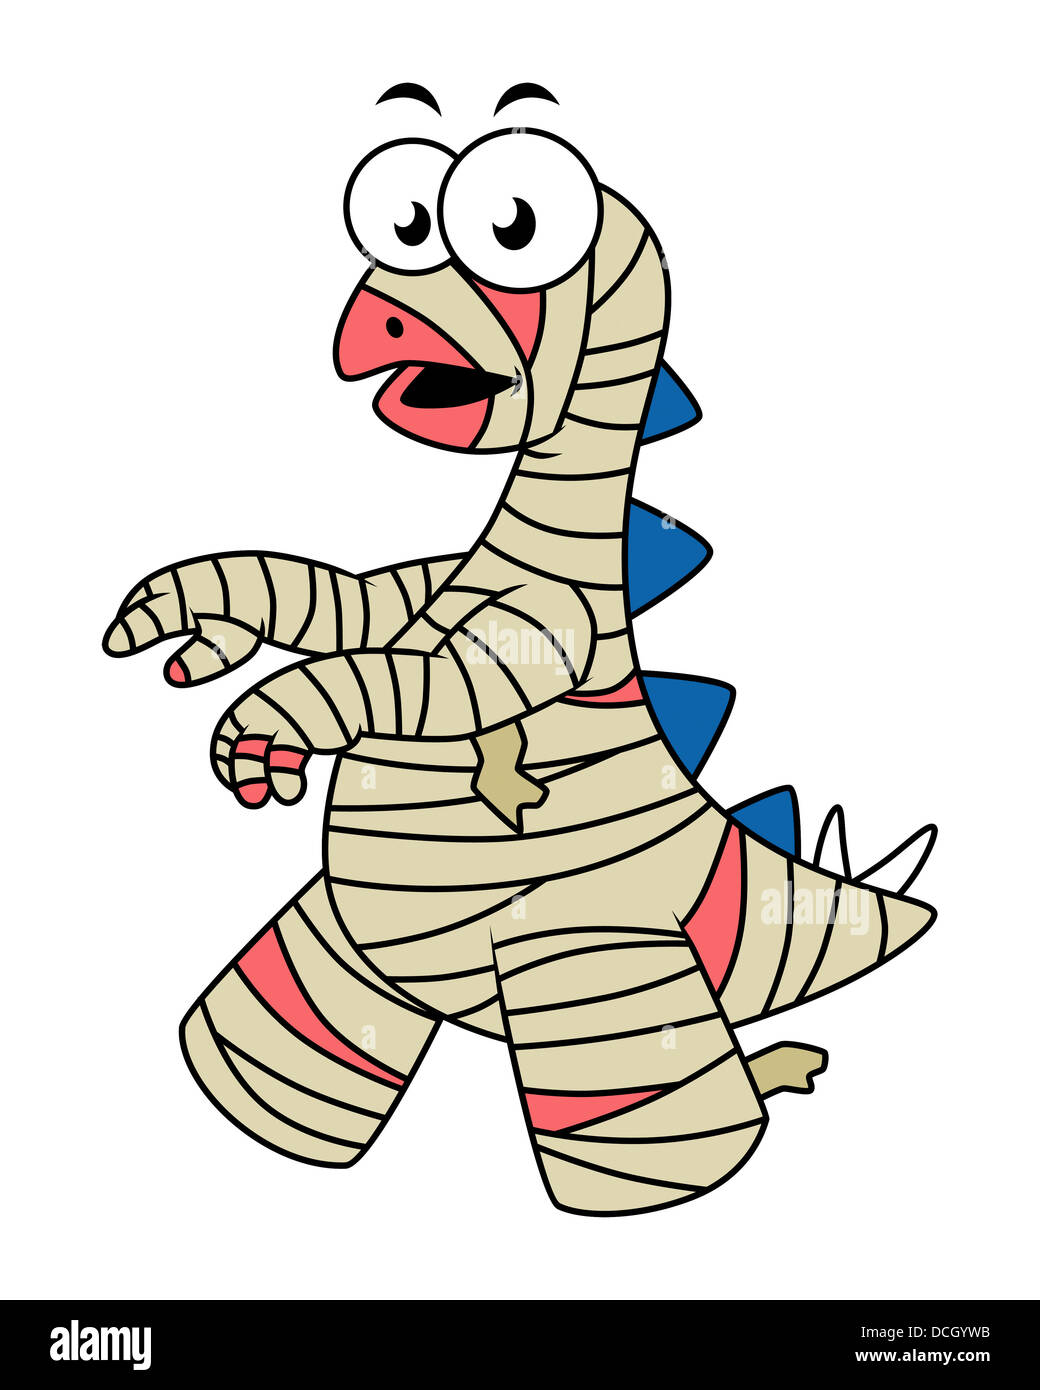 Cartoon illustration of a Stegosaurus dressed up as a mummy. Stock Photo